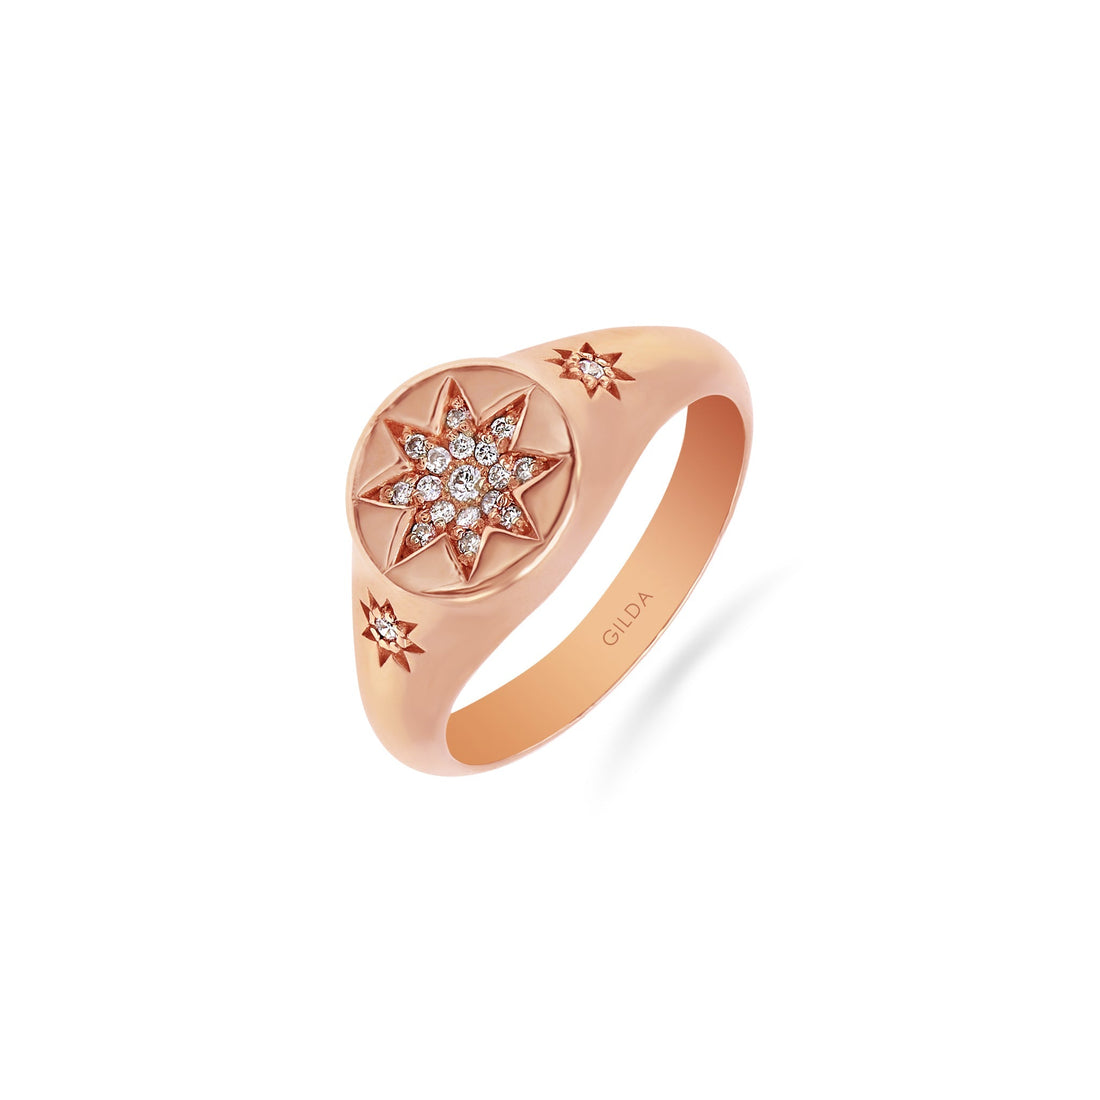 Gilda Jewelry Charming Star | Diamond Ring | 0.08 Cts. | 14K Gold - Rose / 6 / Diamonds - ring Zengoda Shop online from